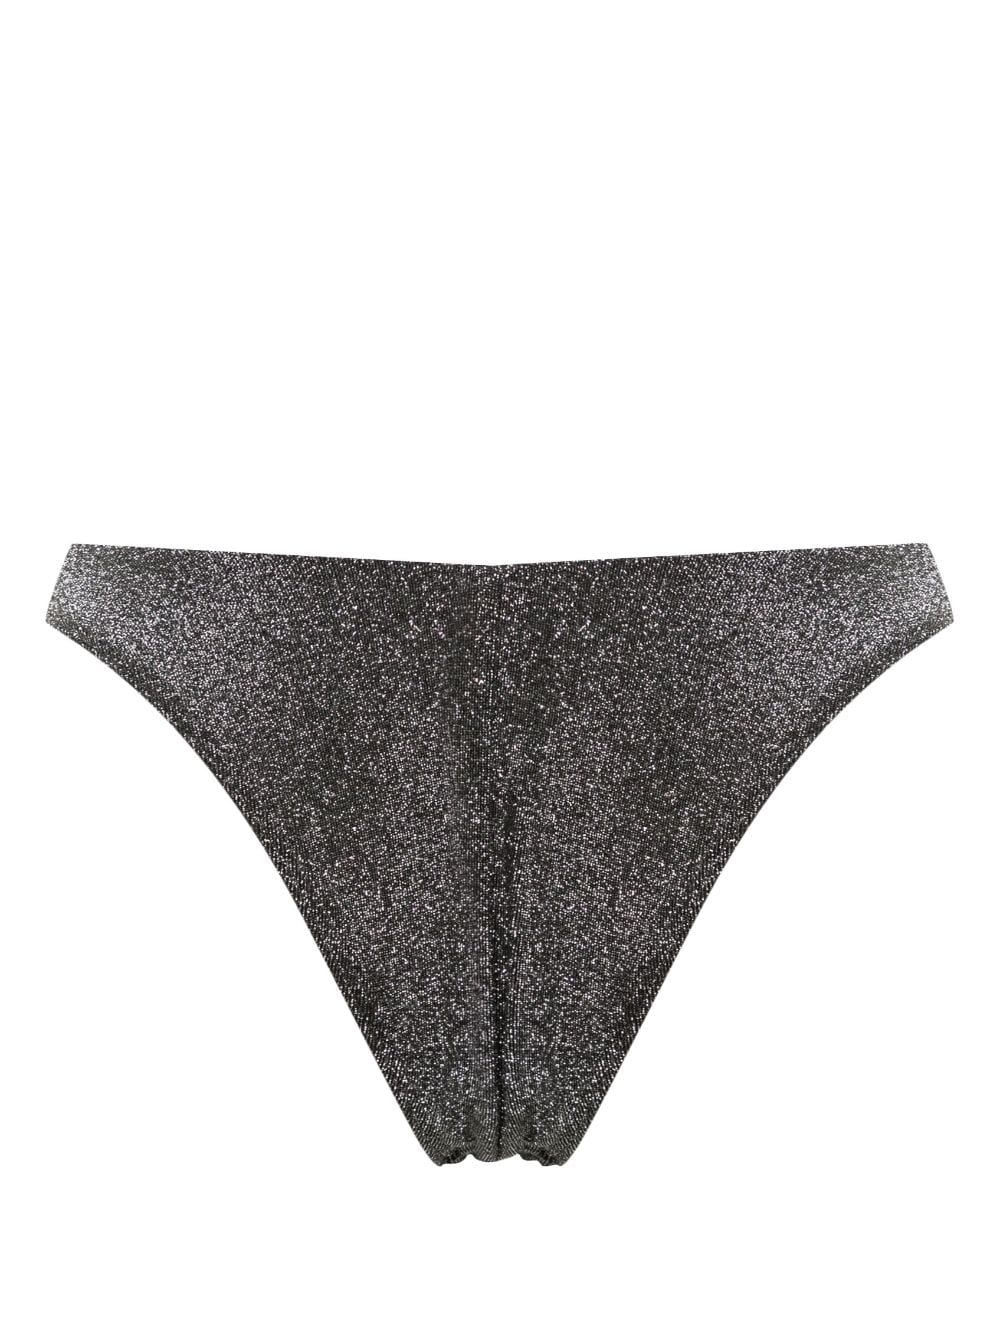 Image 2 of Form and Fold The 90s Staple bikini bottoms